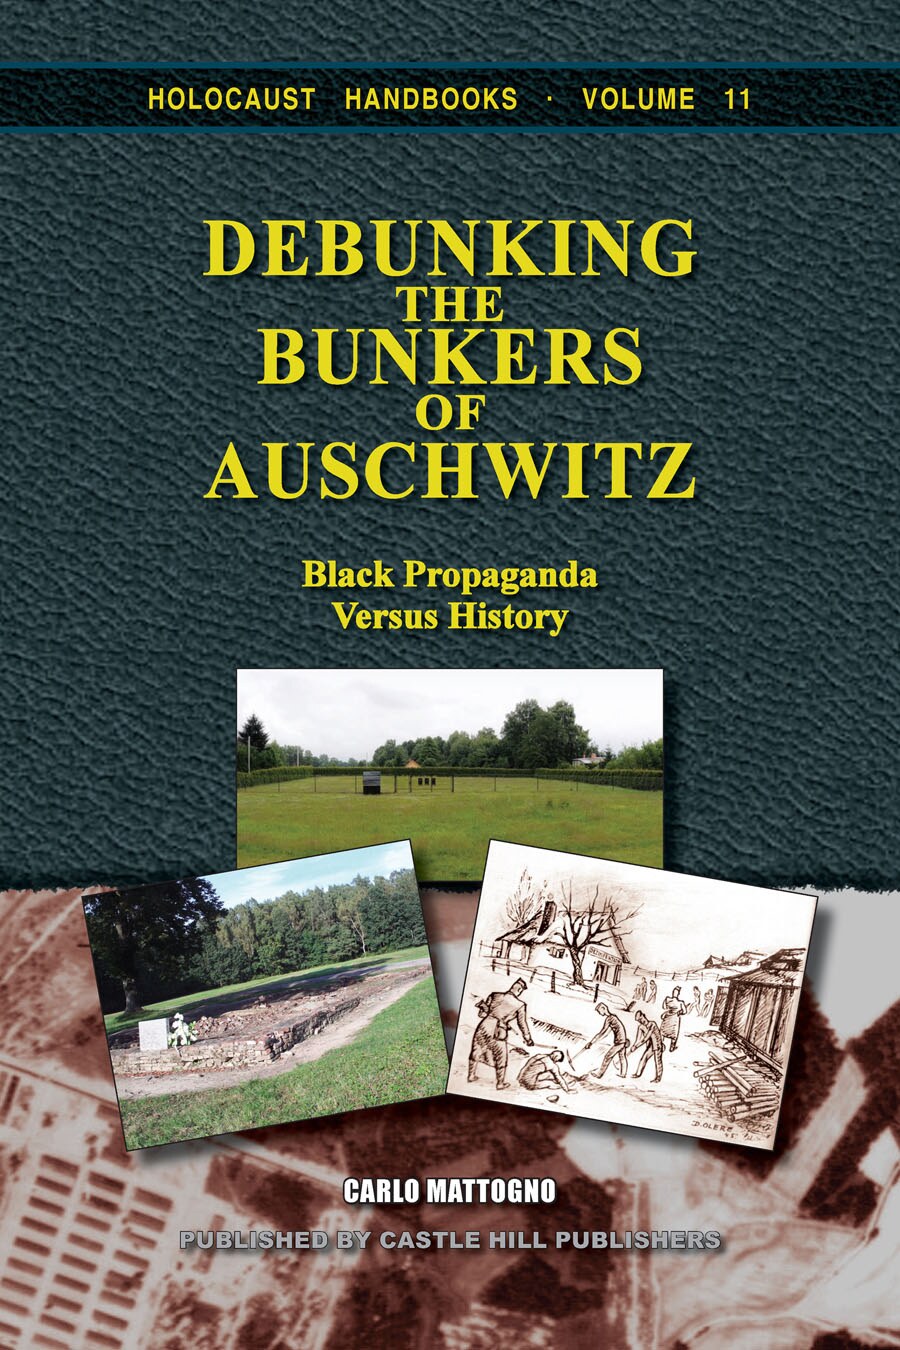 Debunking the Bunkers of Auschwitz: Black Propaganda Versus History